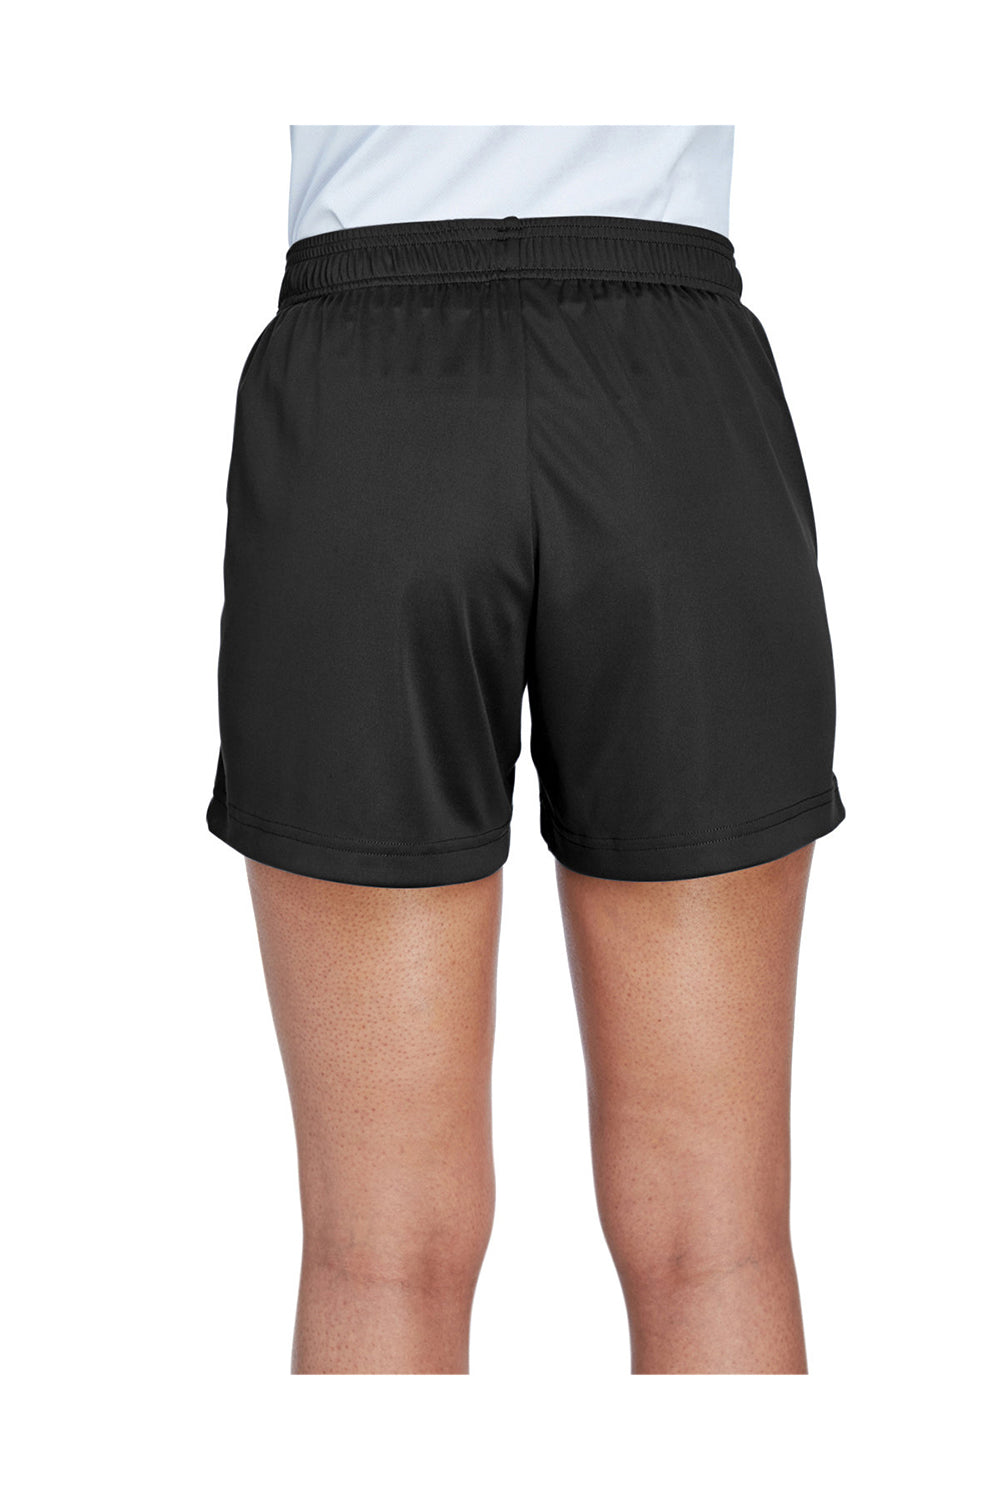 Team 365 TT11SHW Womens Zone Performance Shorts w/ Pockets Black Back